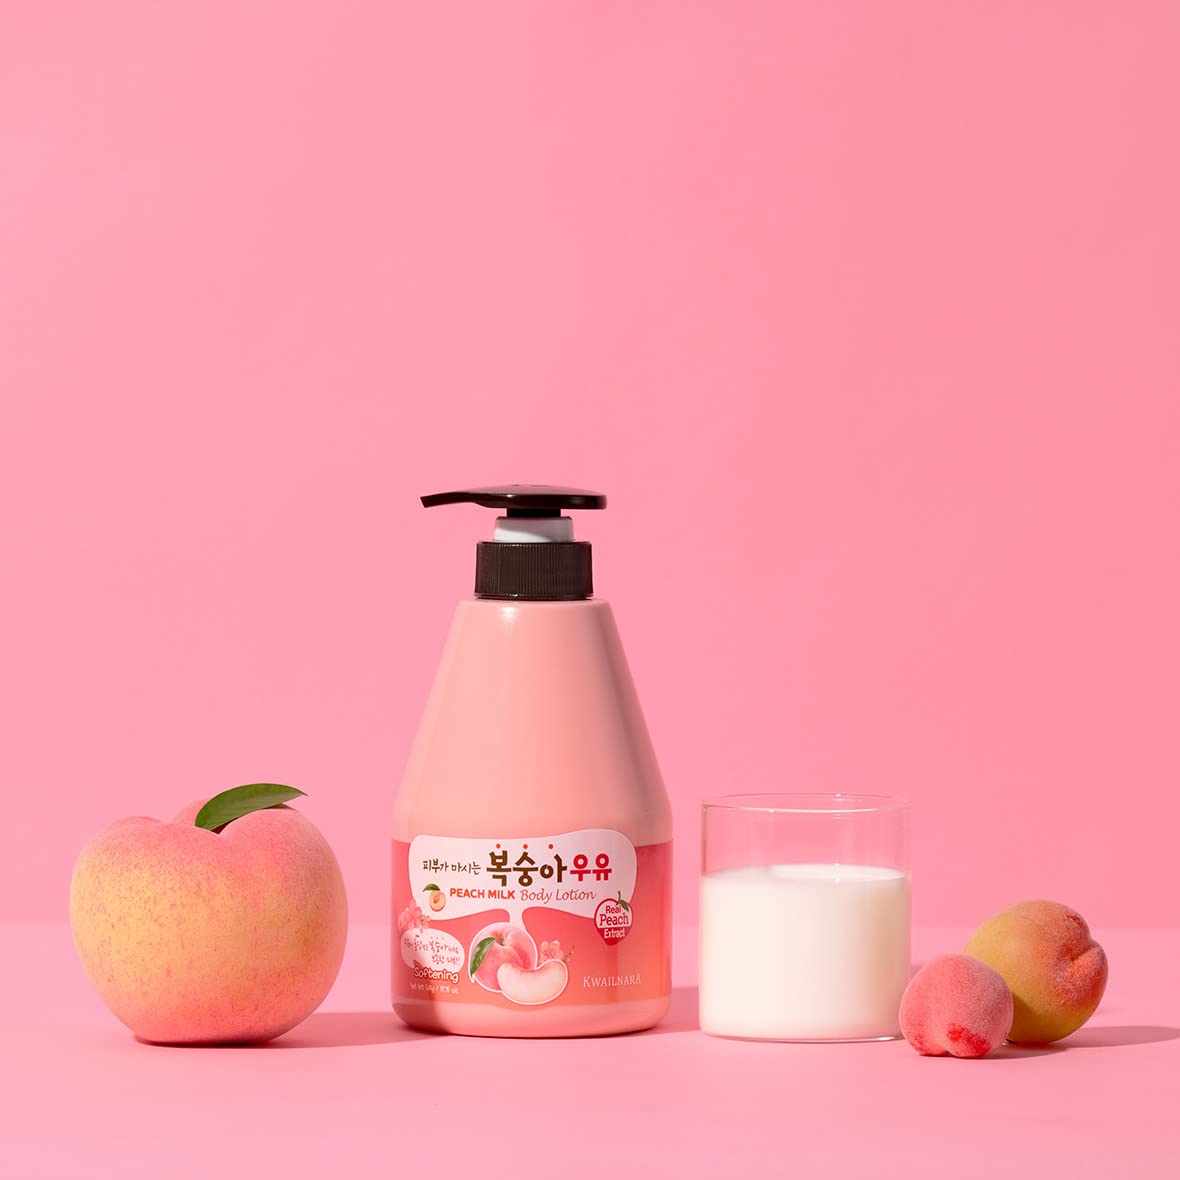 Milk Body Lotion [Peach]